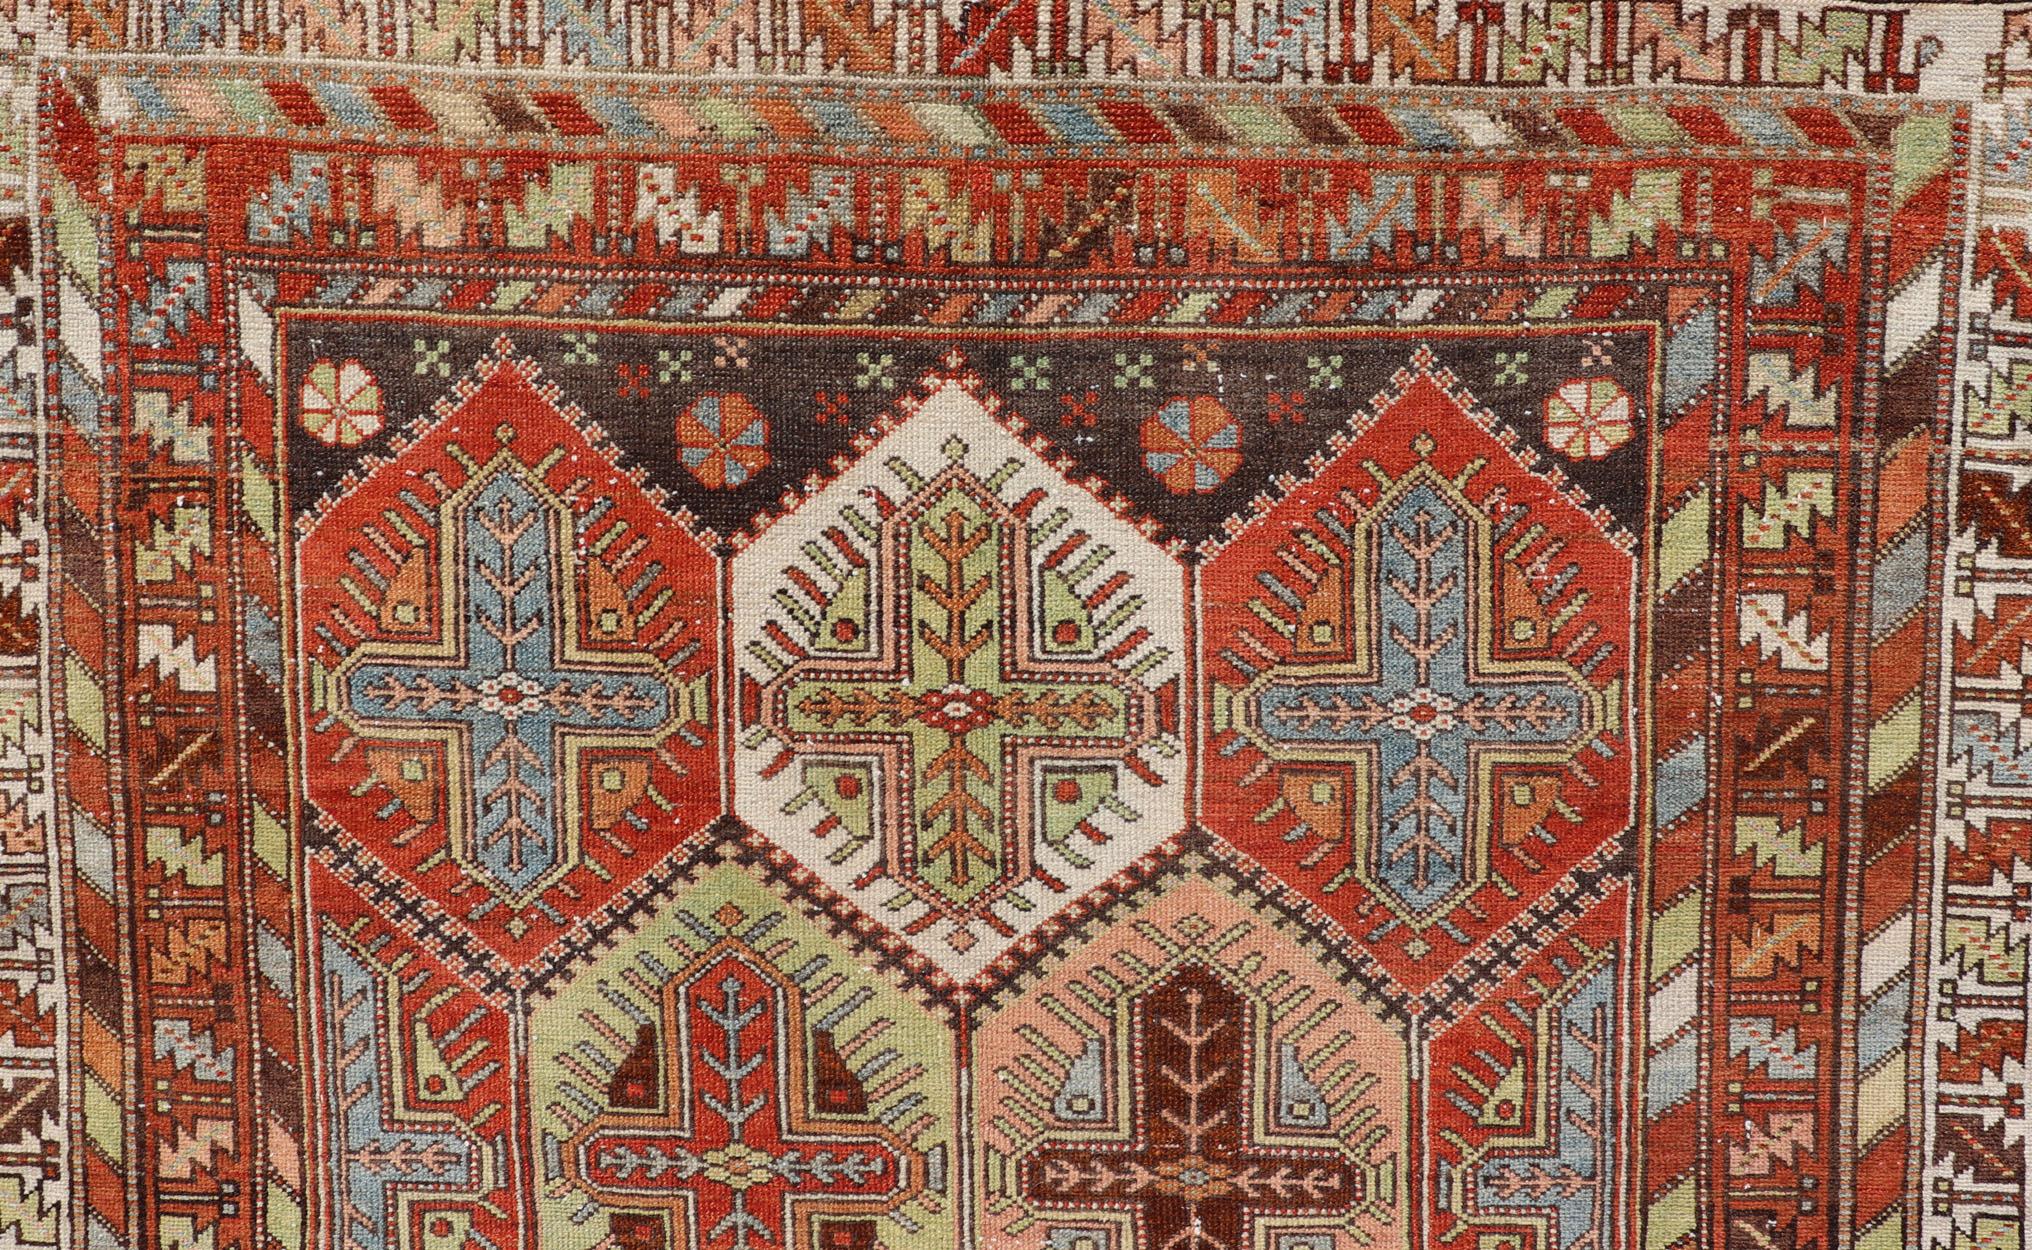 Wool Antique Persian Tribal Motif Design with Crosses Bakhtiari Rug in Multi Colors For Sale